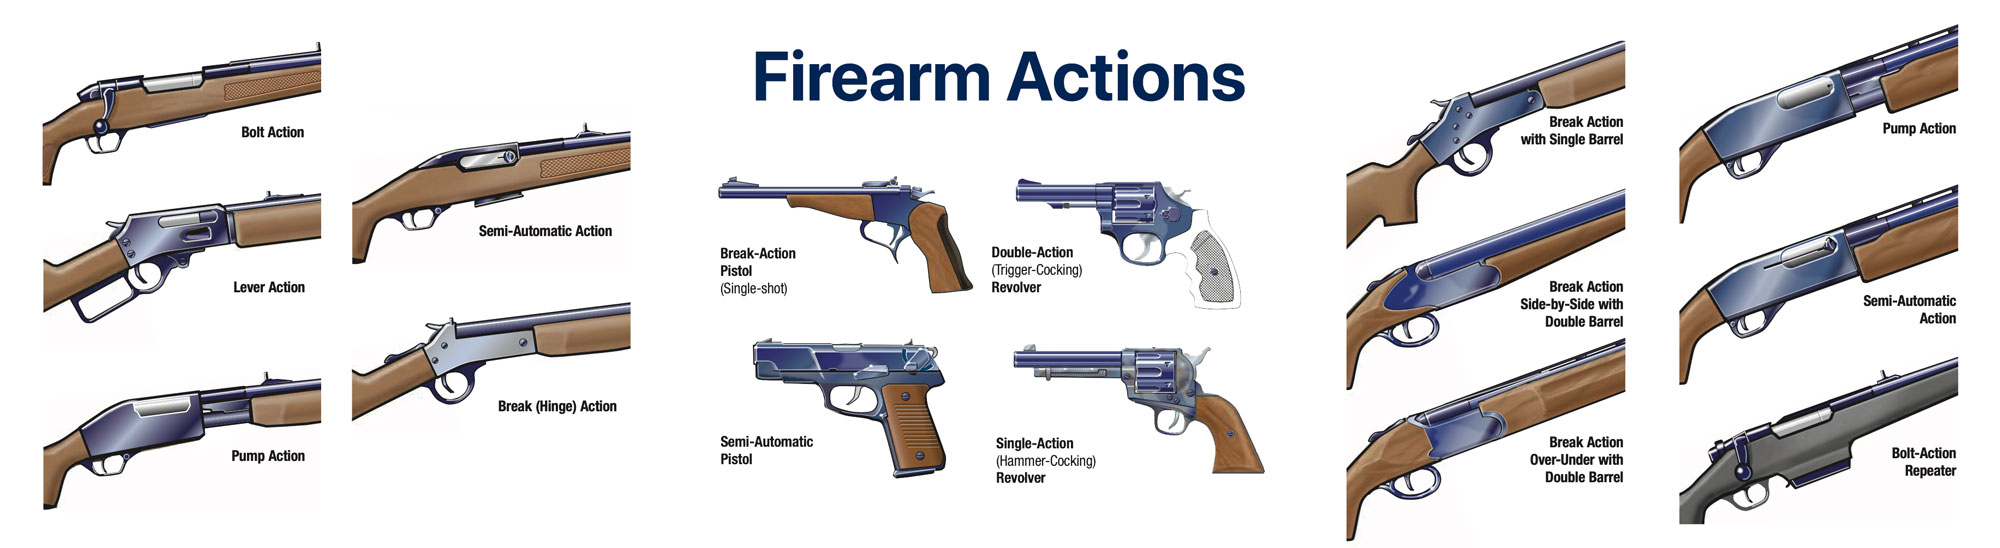 Firearm Actions for Rifles, Pistols, & Shotguns